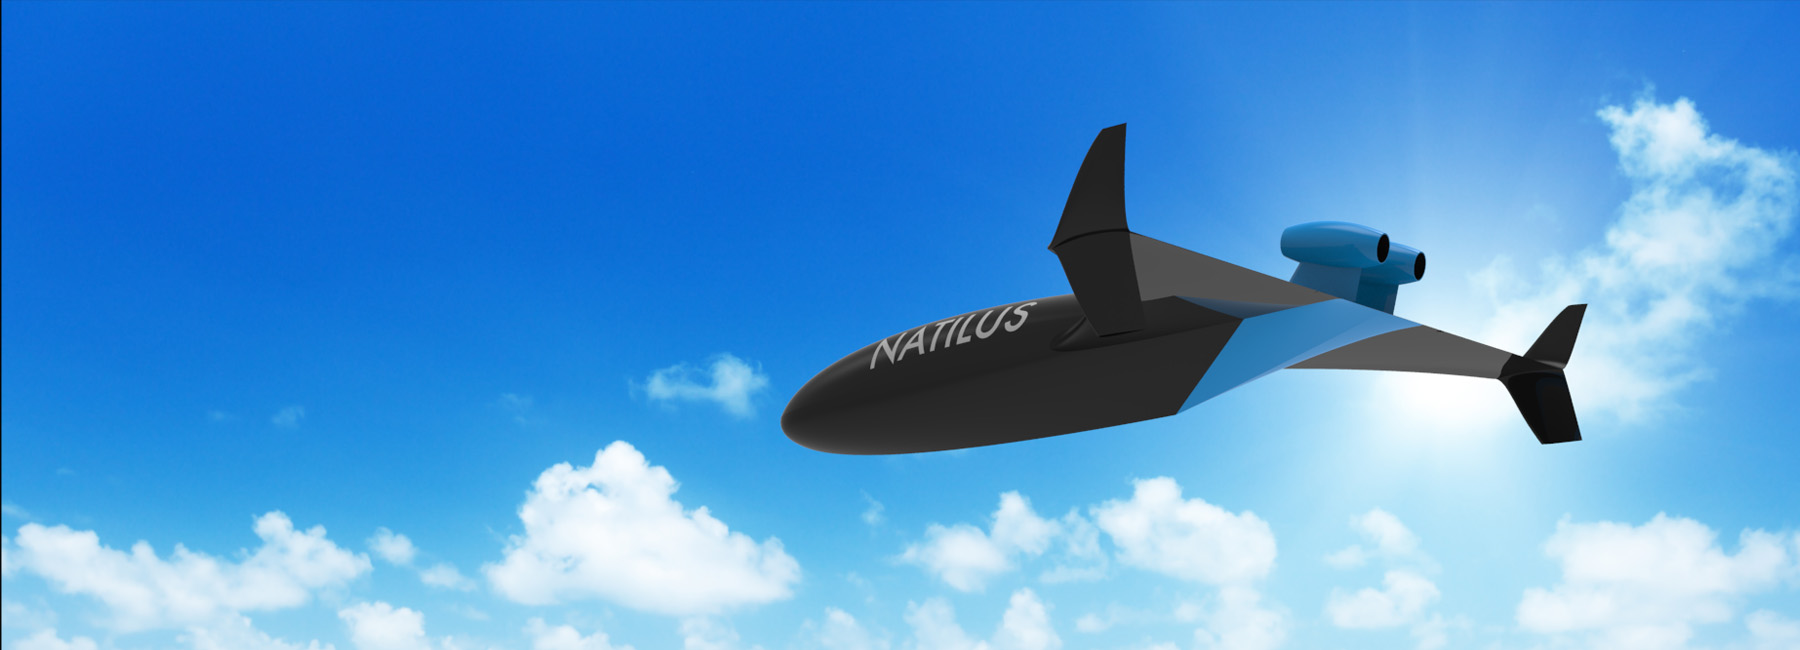 natilus-delivery-drone-designboom-03-29-